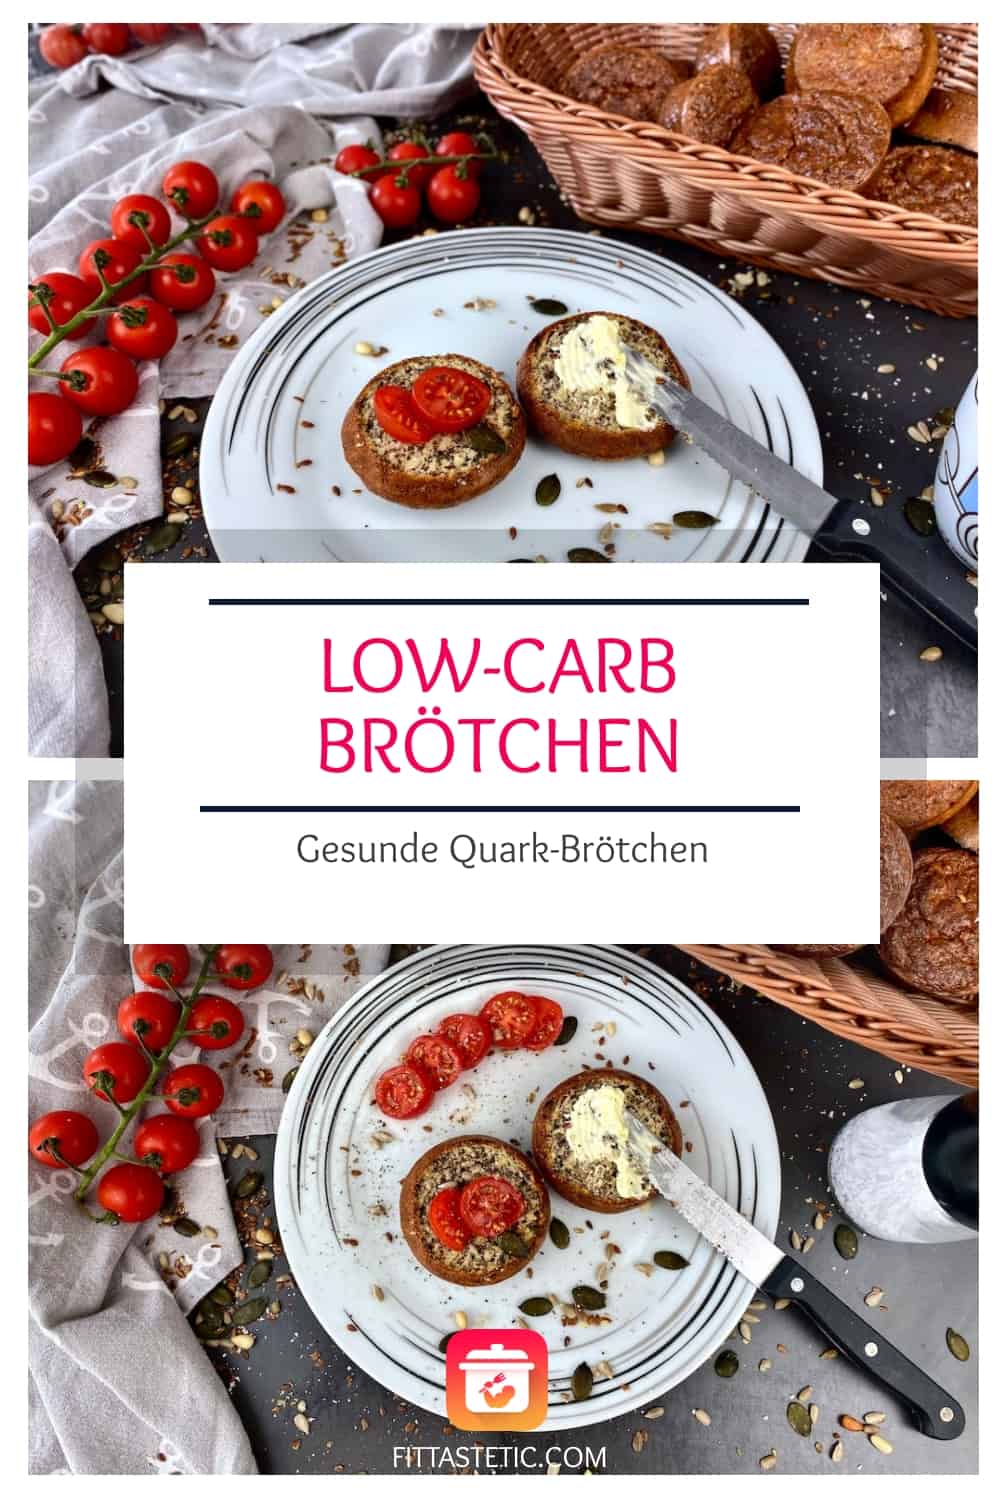 Low-Carb Brötchen - Gesunde Quark-Brötchen